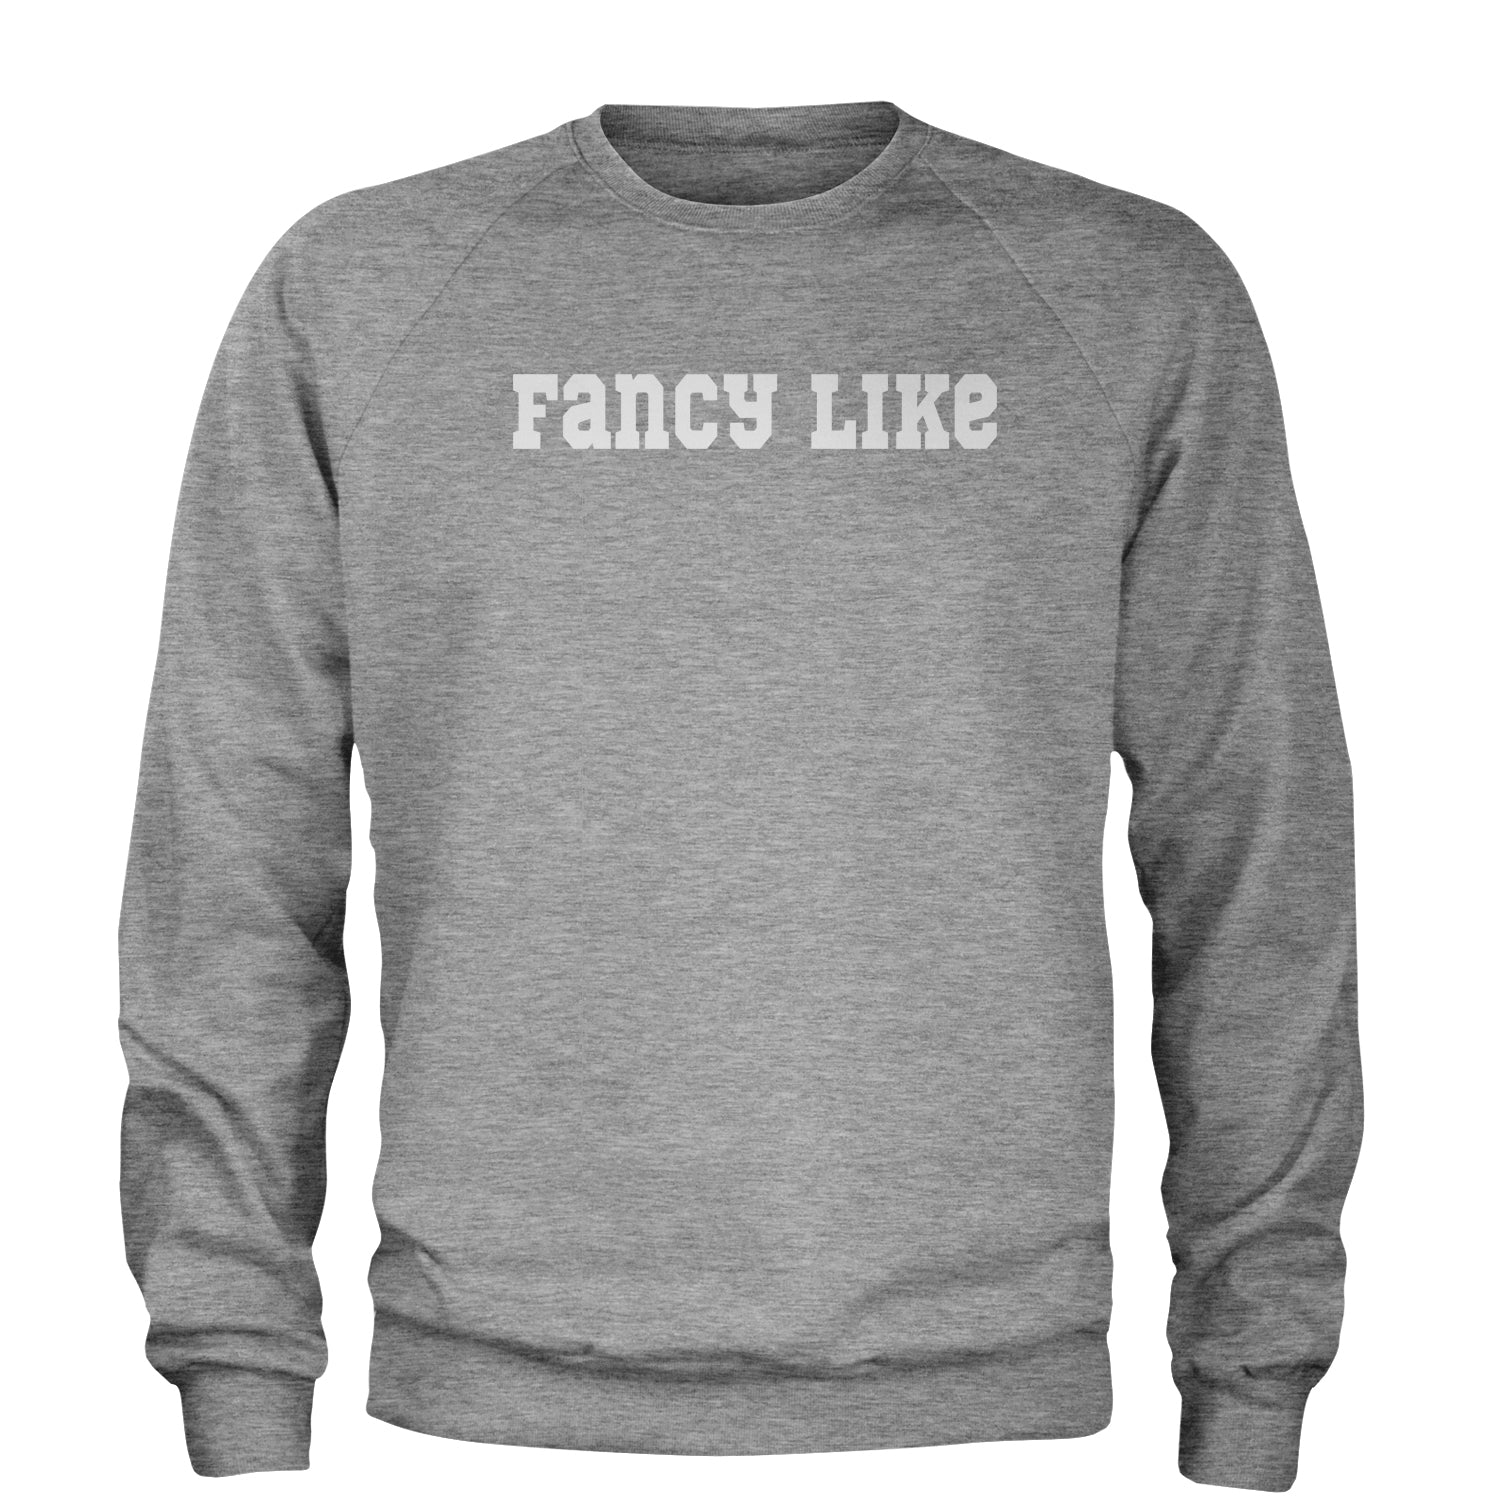 Fancy Like Adult Crewneck Sweatshirt hayes, walter by Expression Tees